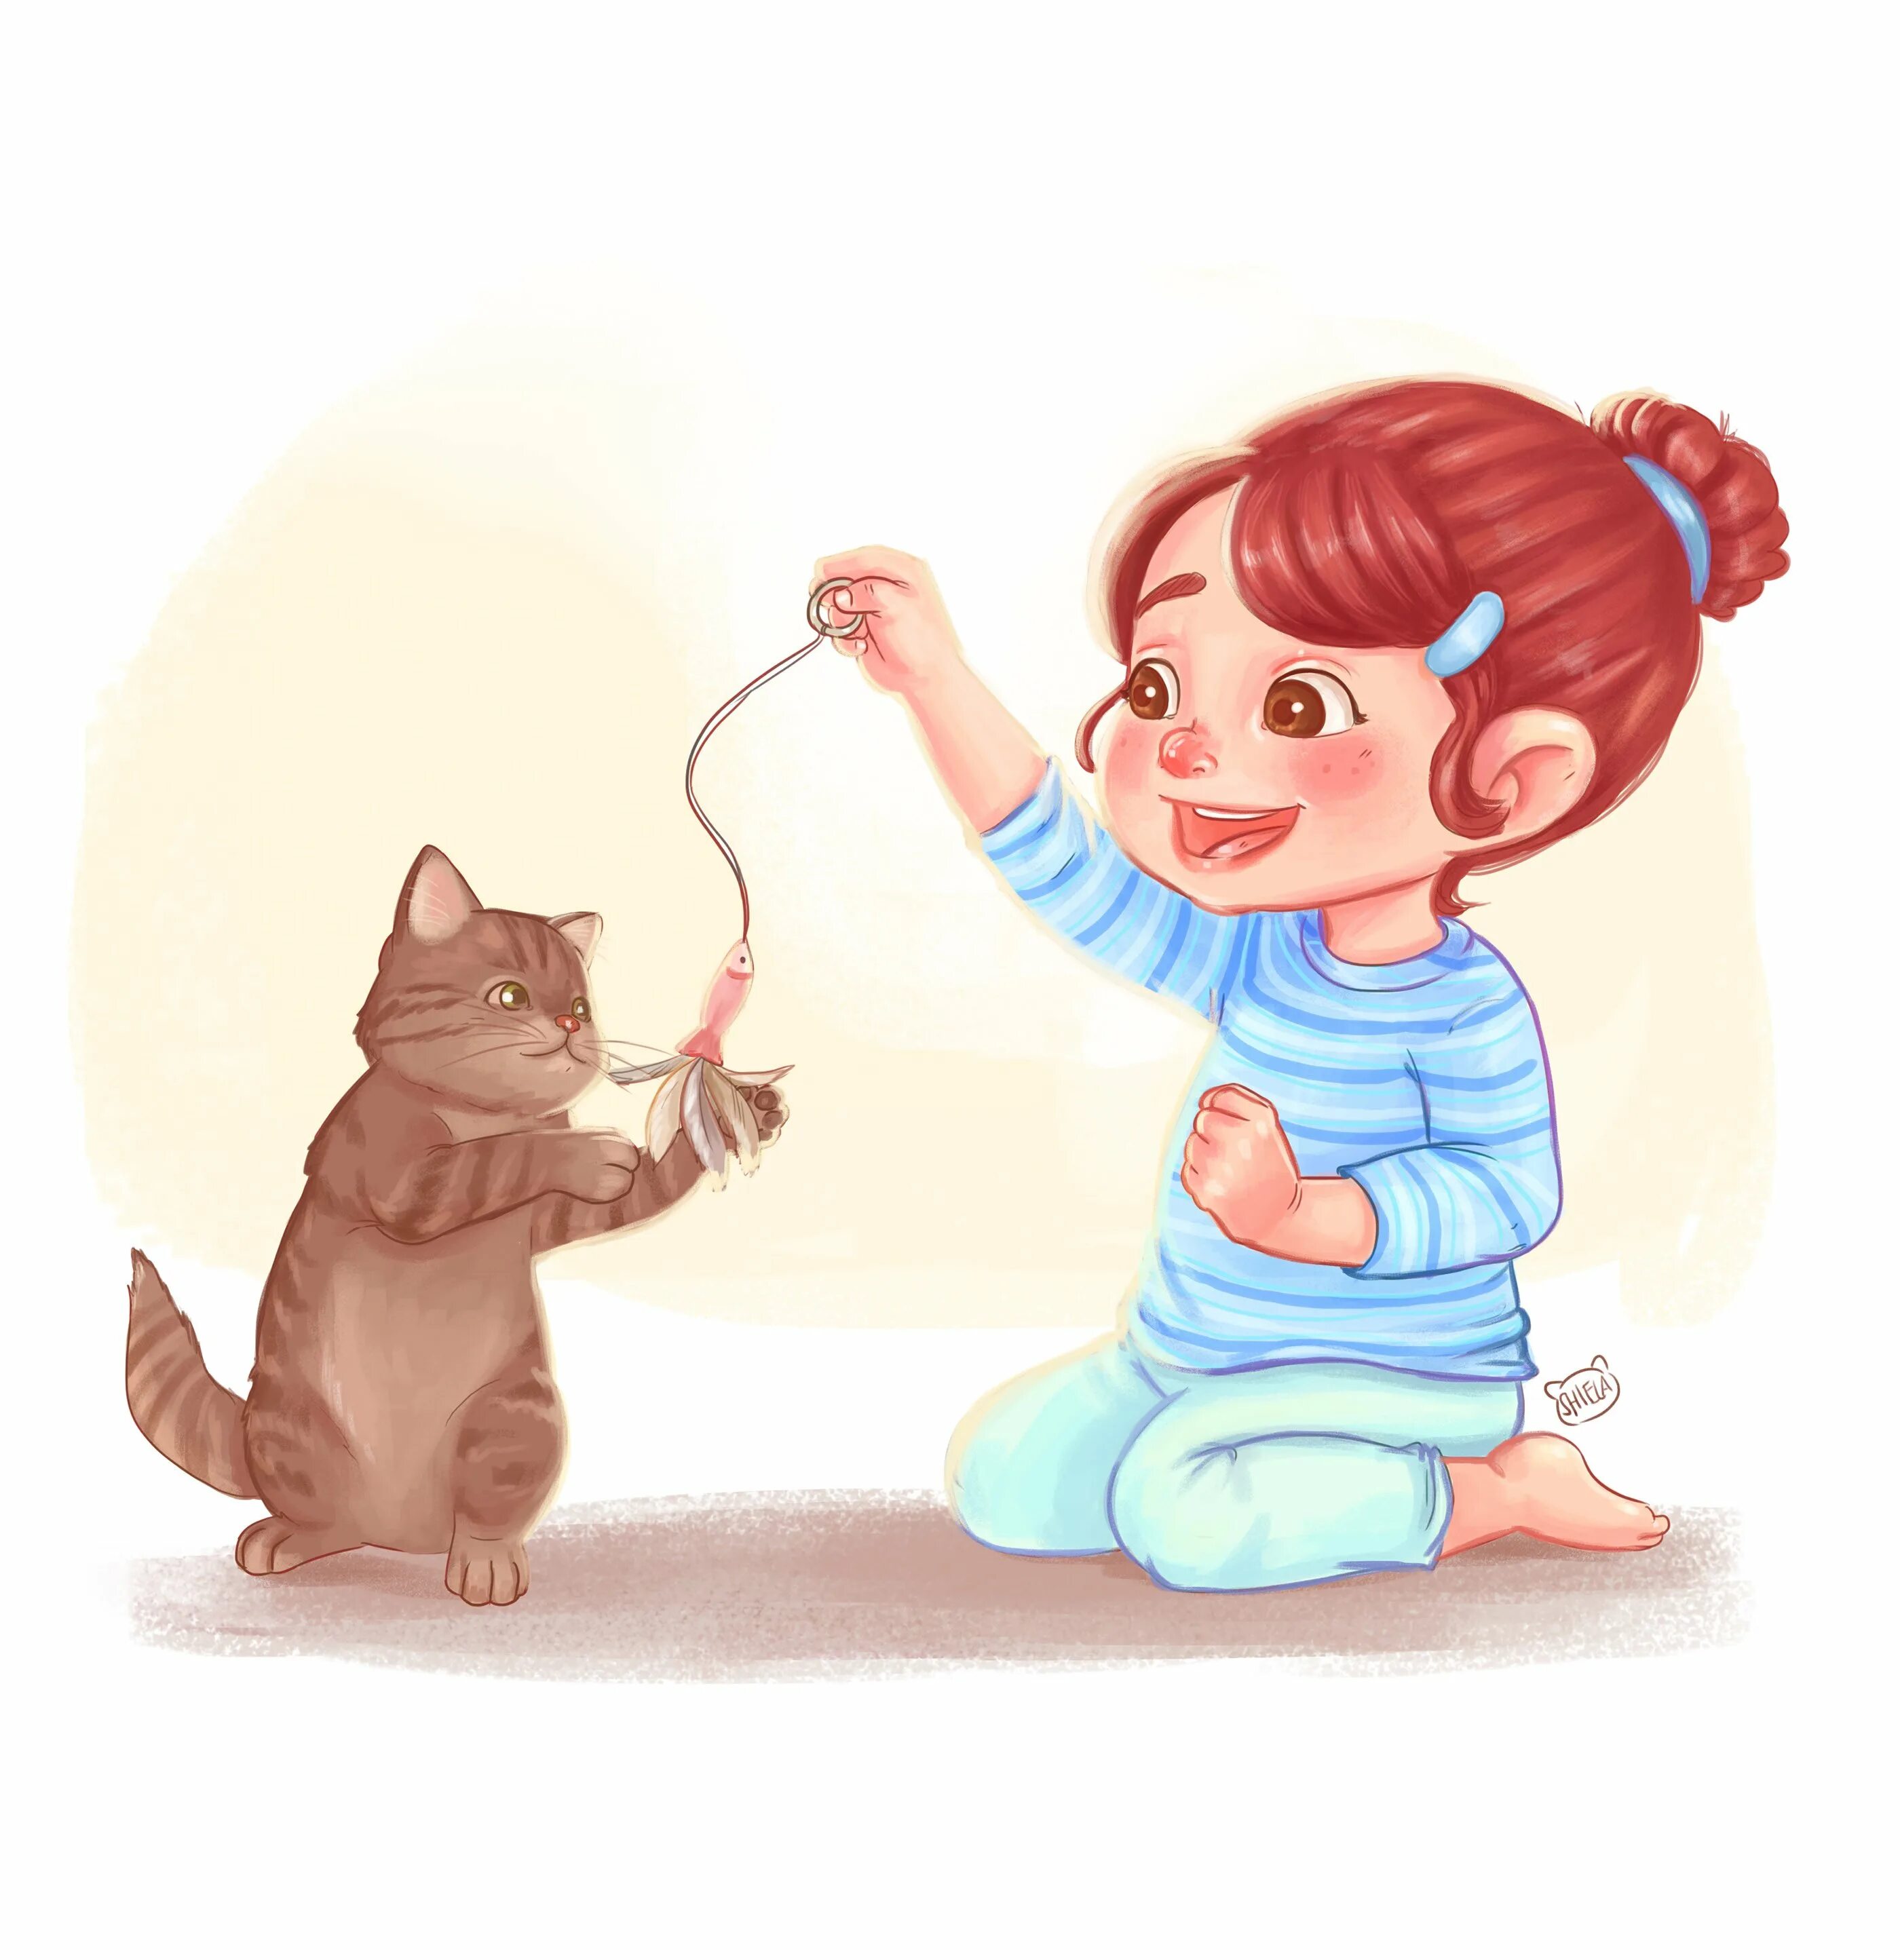 I play with cat. Котята. Девочка. Дети. Девочка с котенком рисунок. Девочка играет с котенком. Играющий котенок для детей.